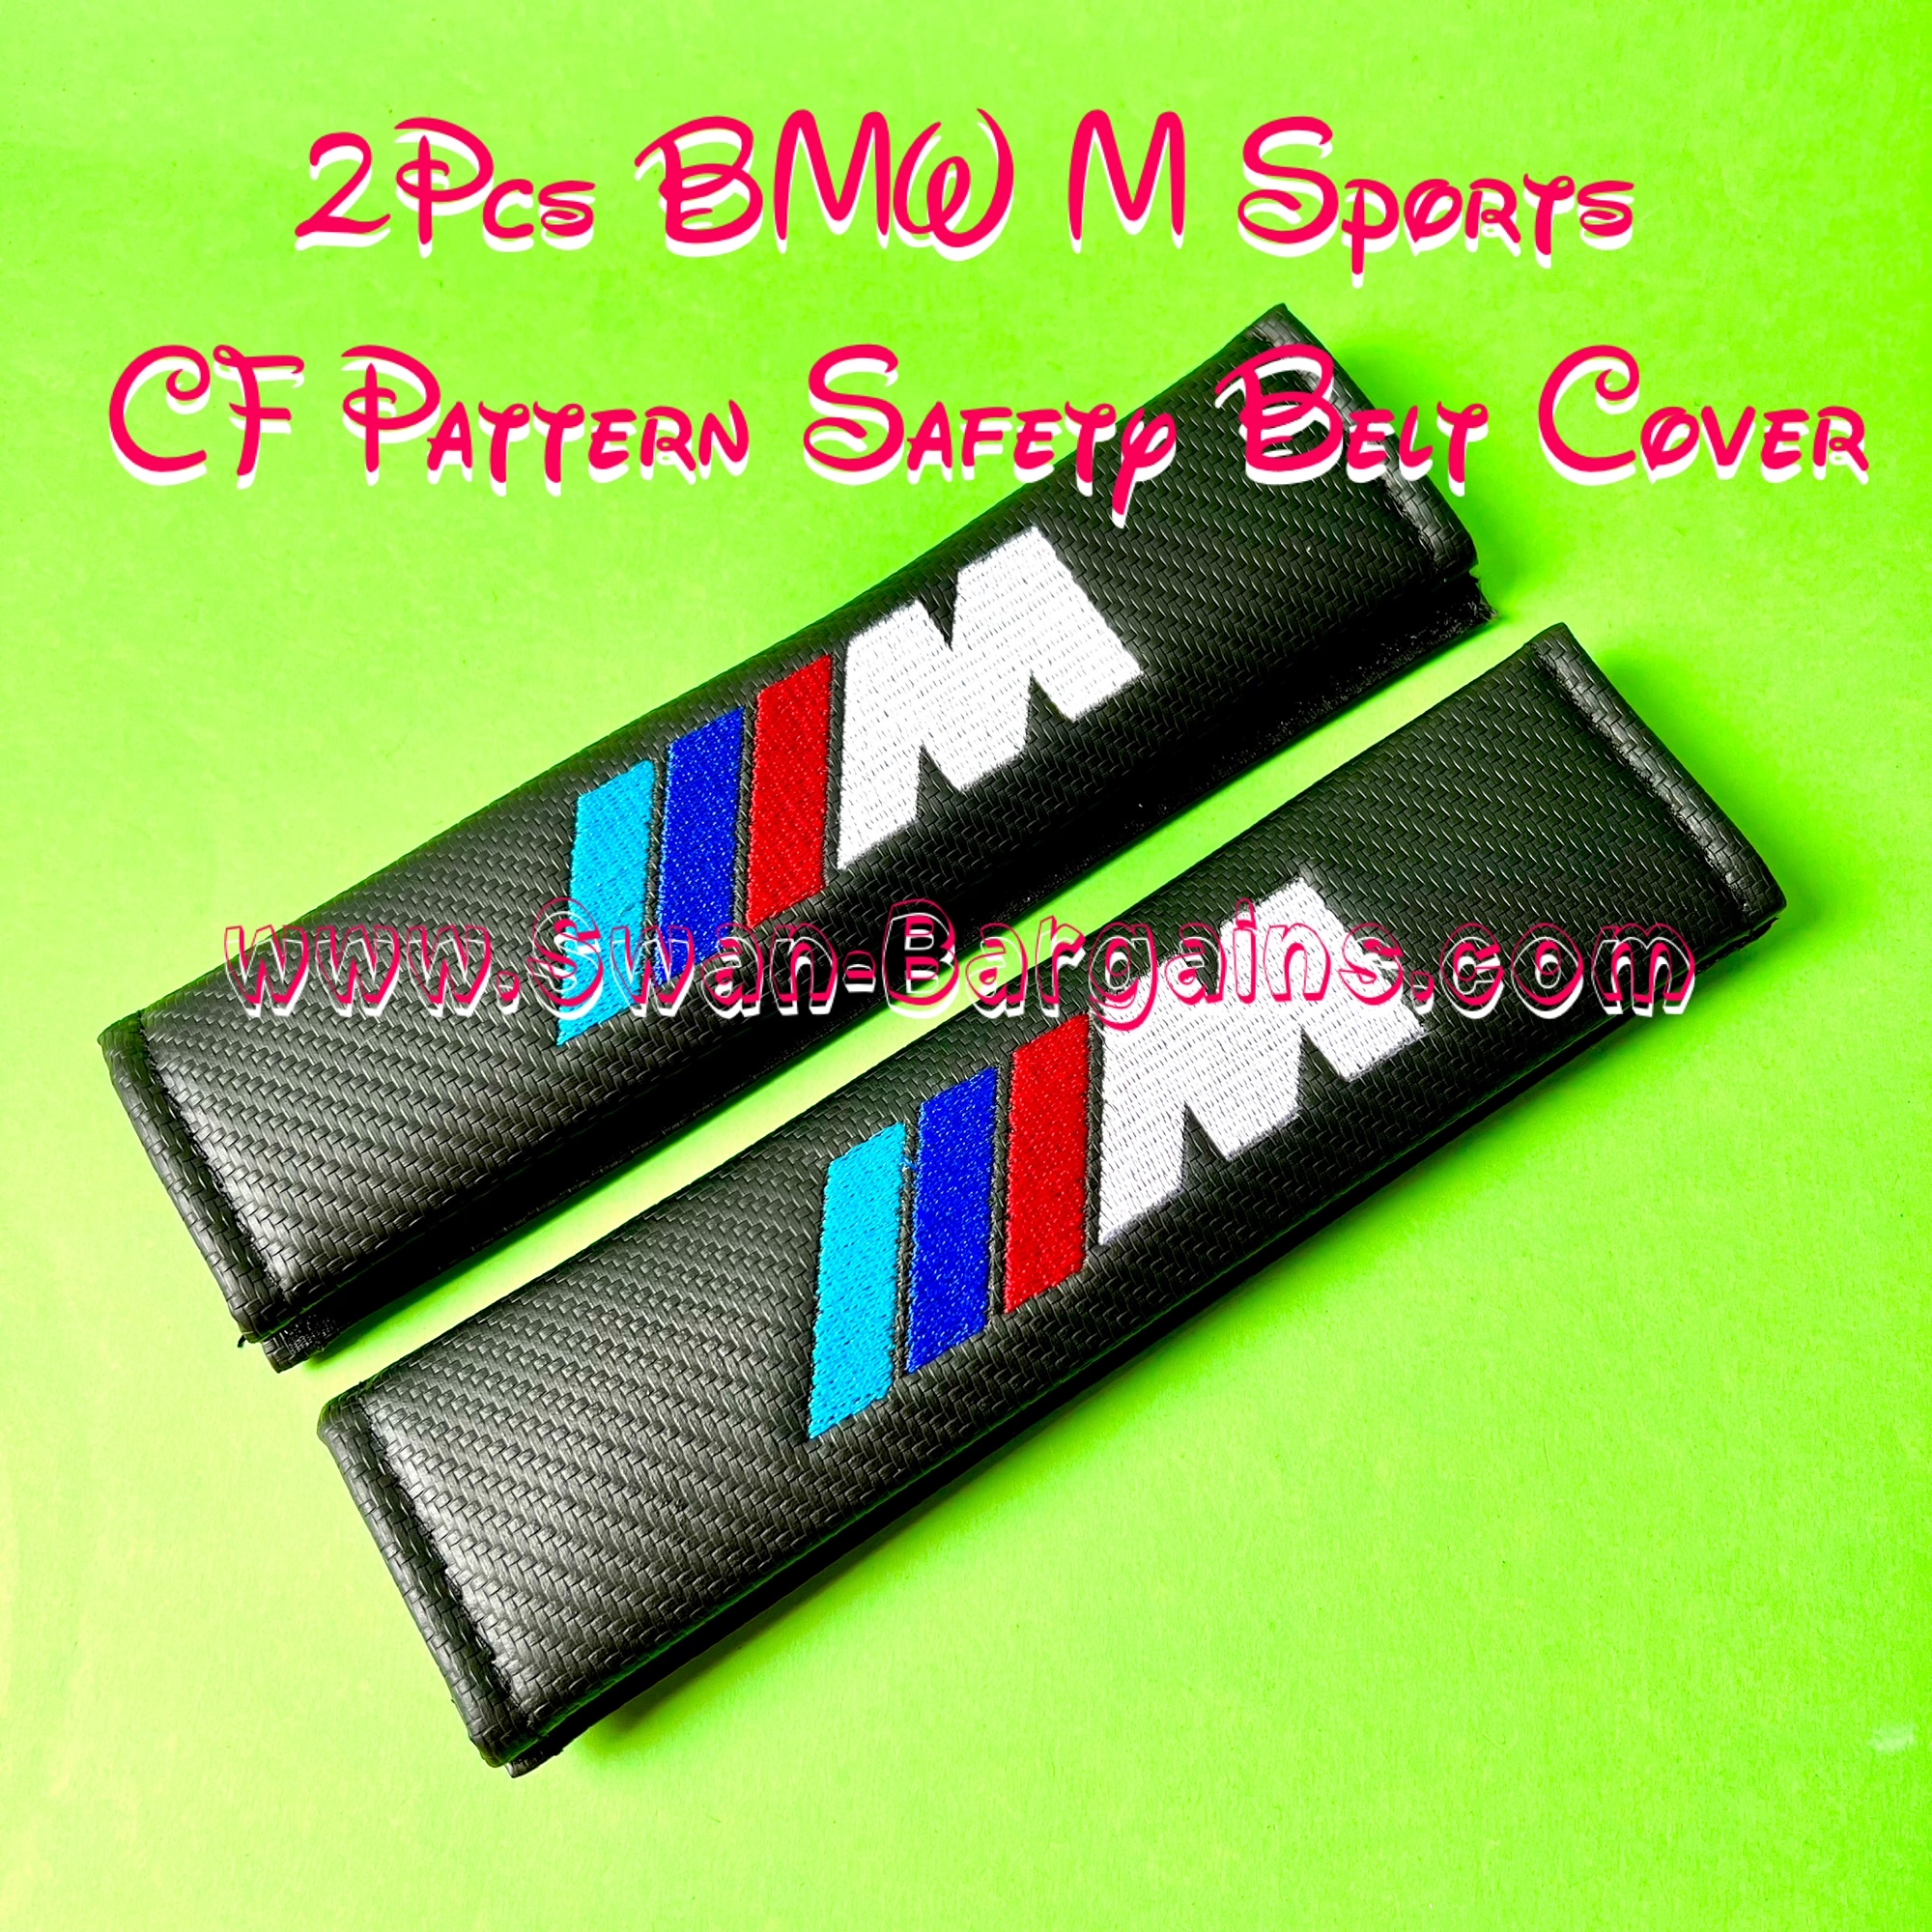 M Sports BMW Car Safety Belt Cover Set Singapore